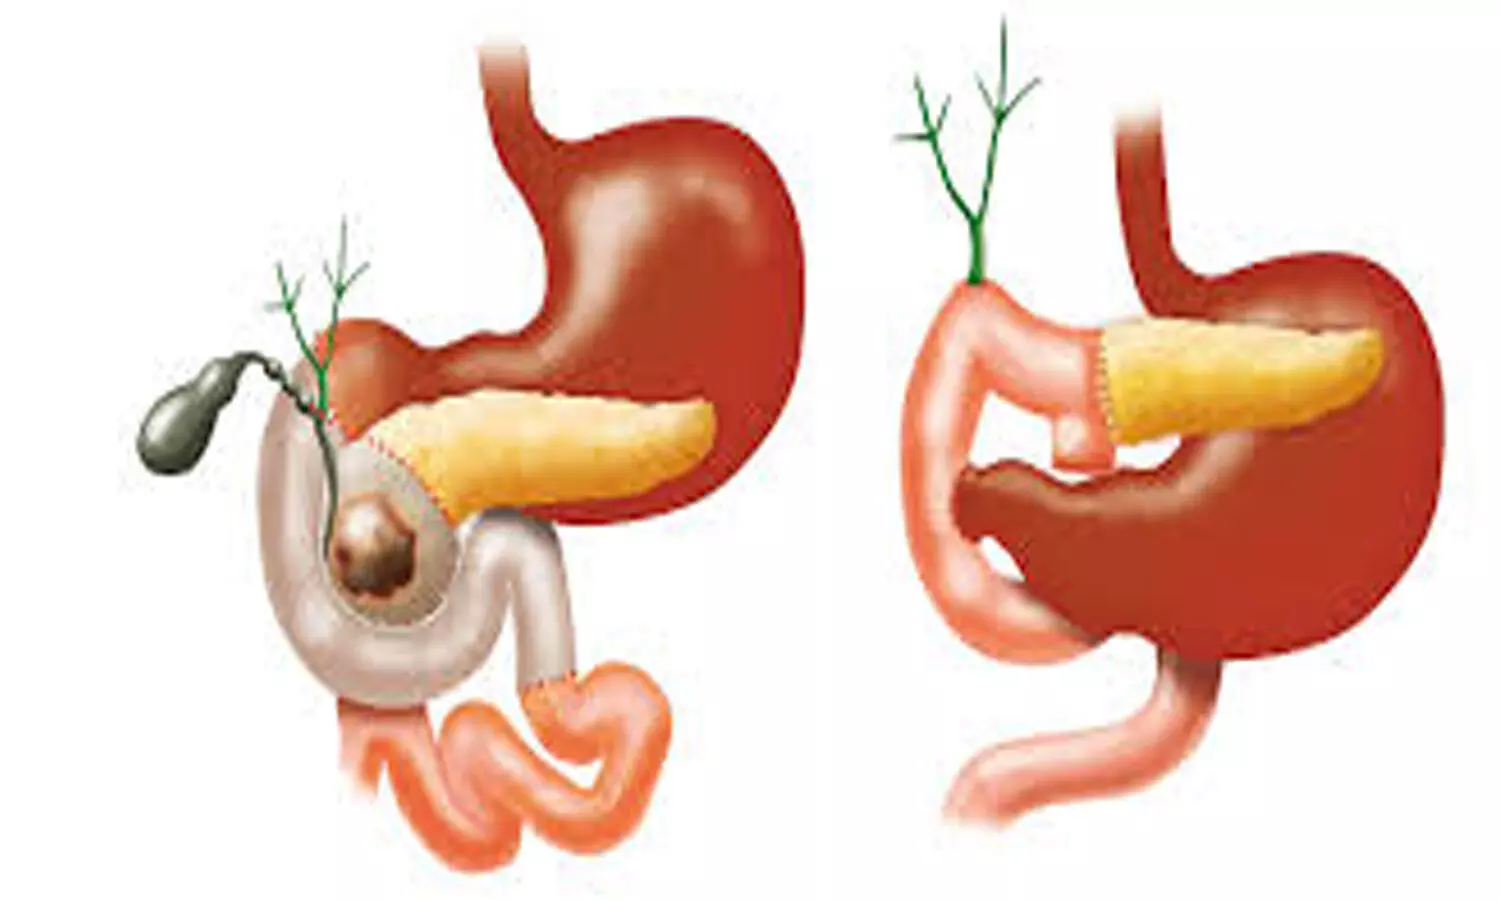 Avoiding nasogastric decompression safe after pancreaticoduodenectomy: JAMA